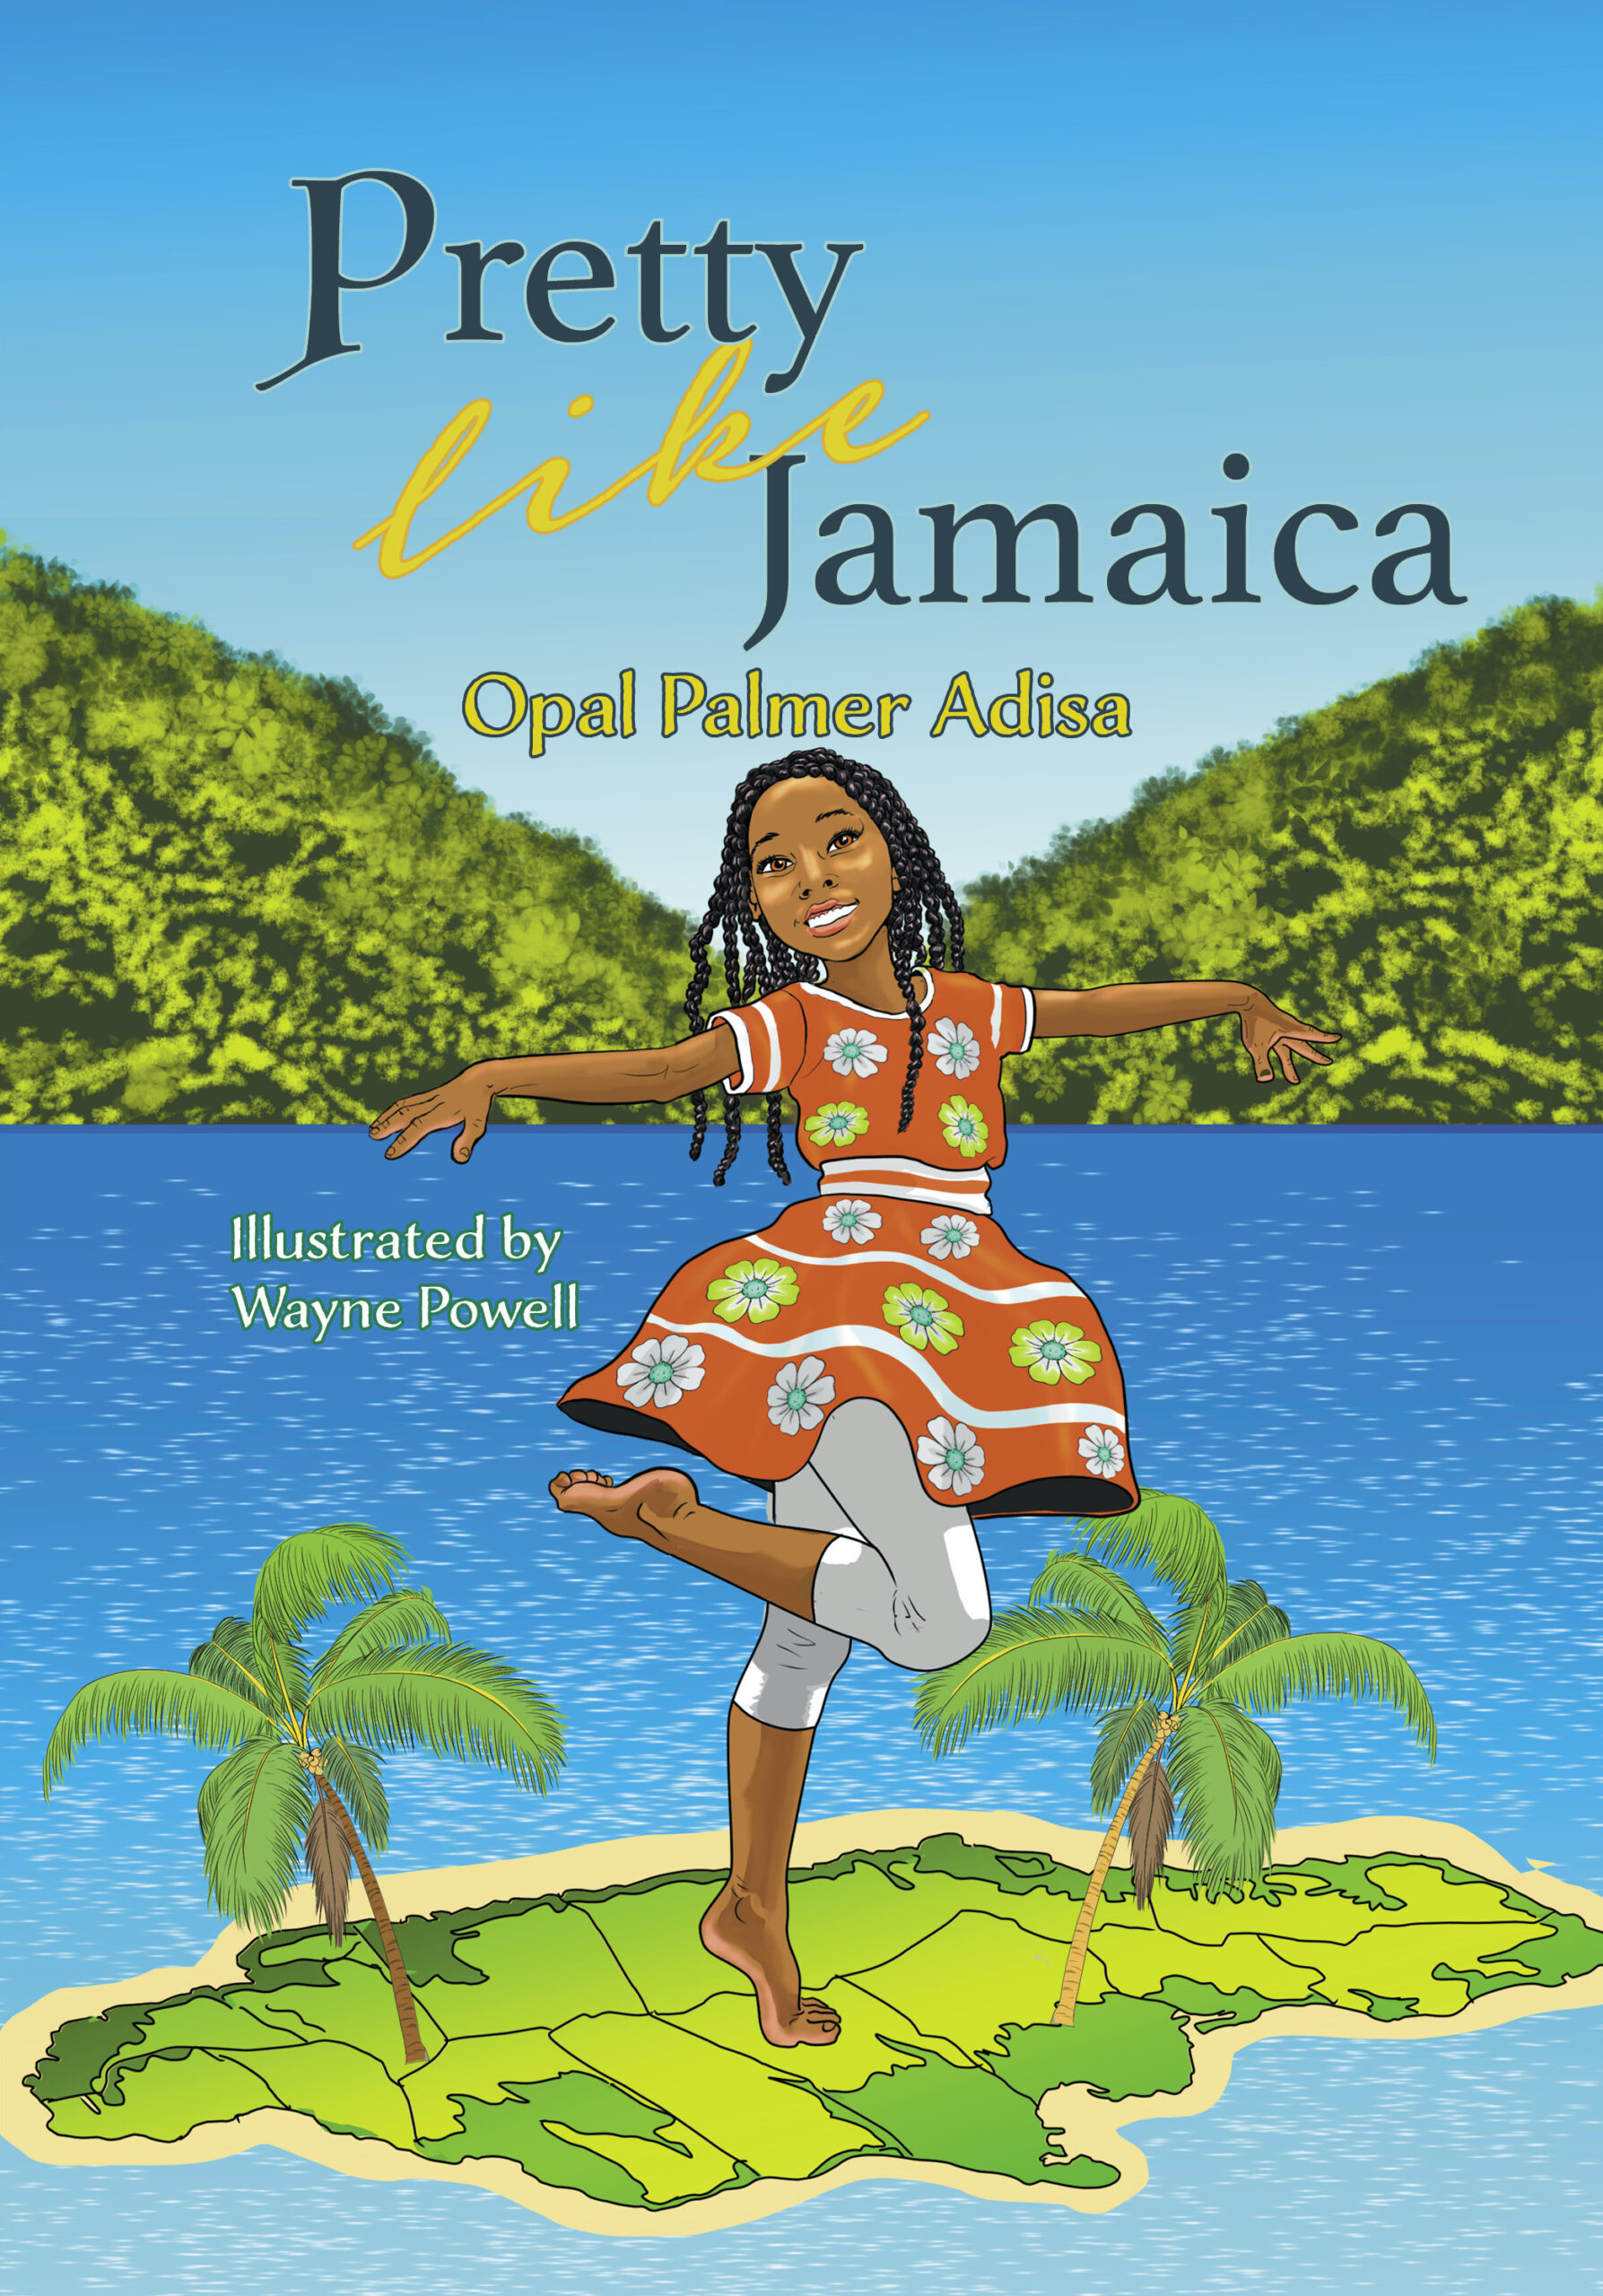 Picture Caribbean Books